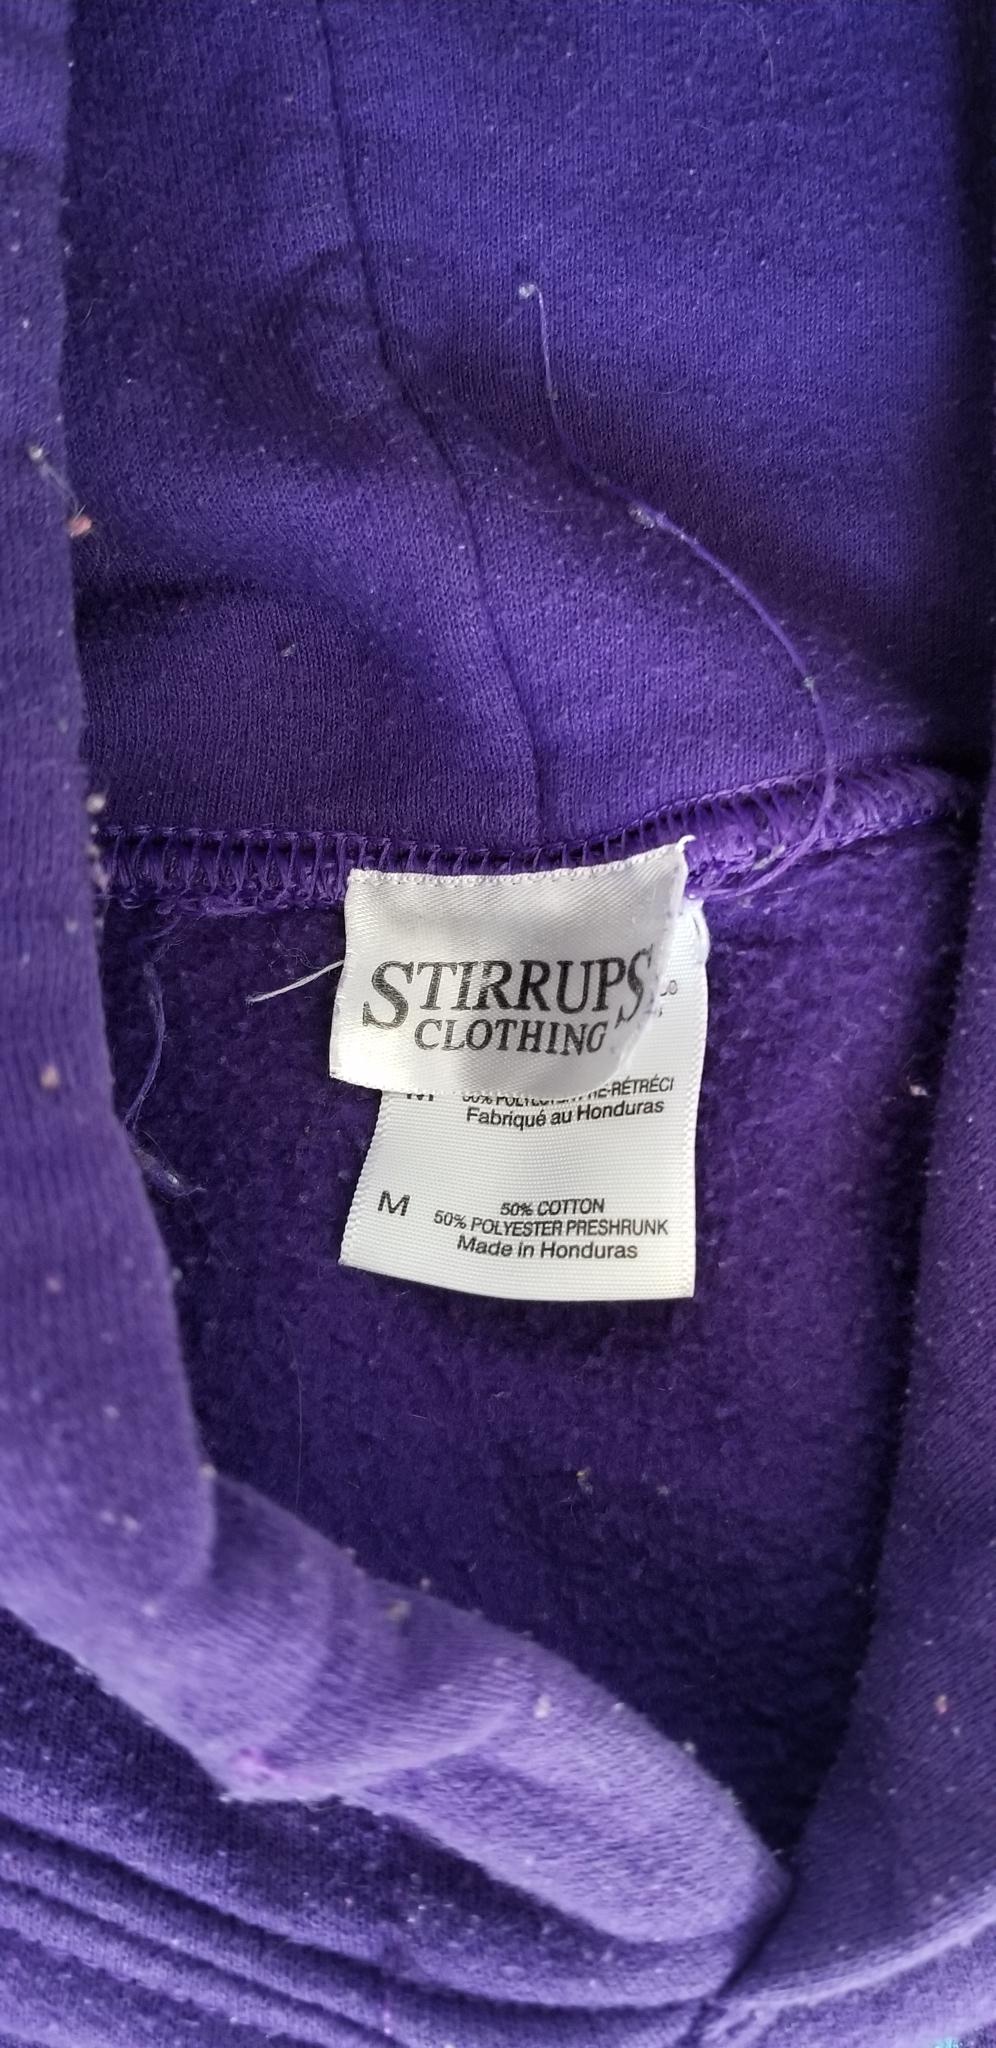 Stirrups Clothing Hoodie - Purple - Medium